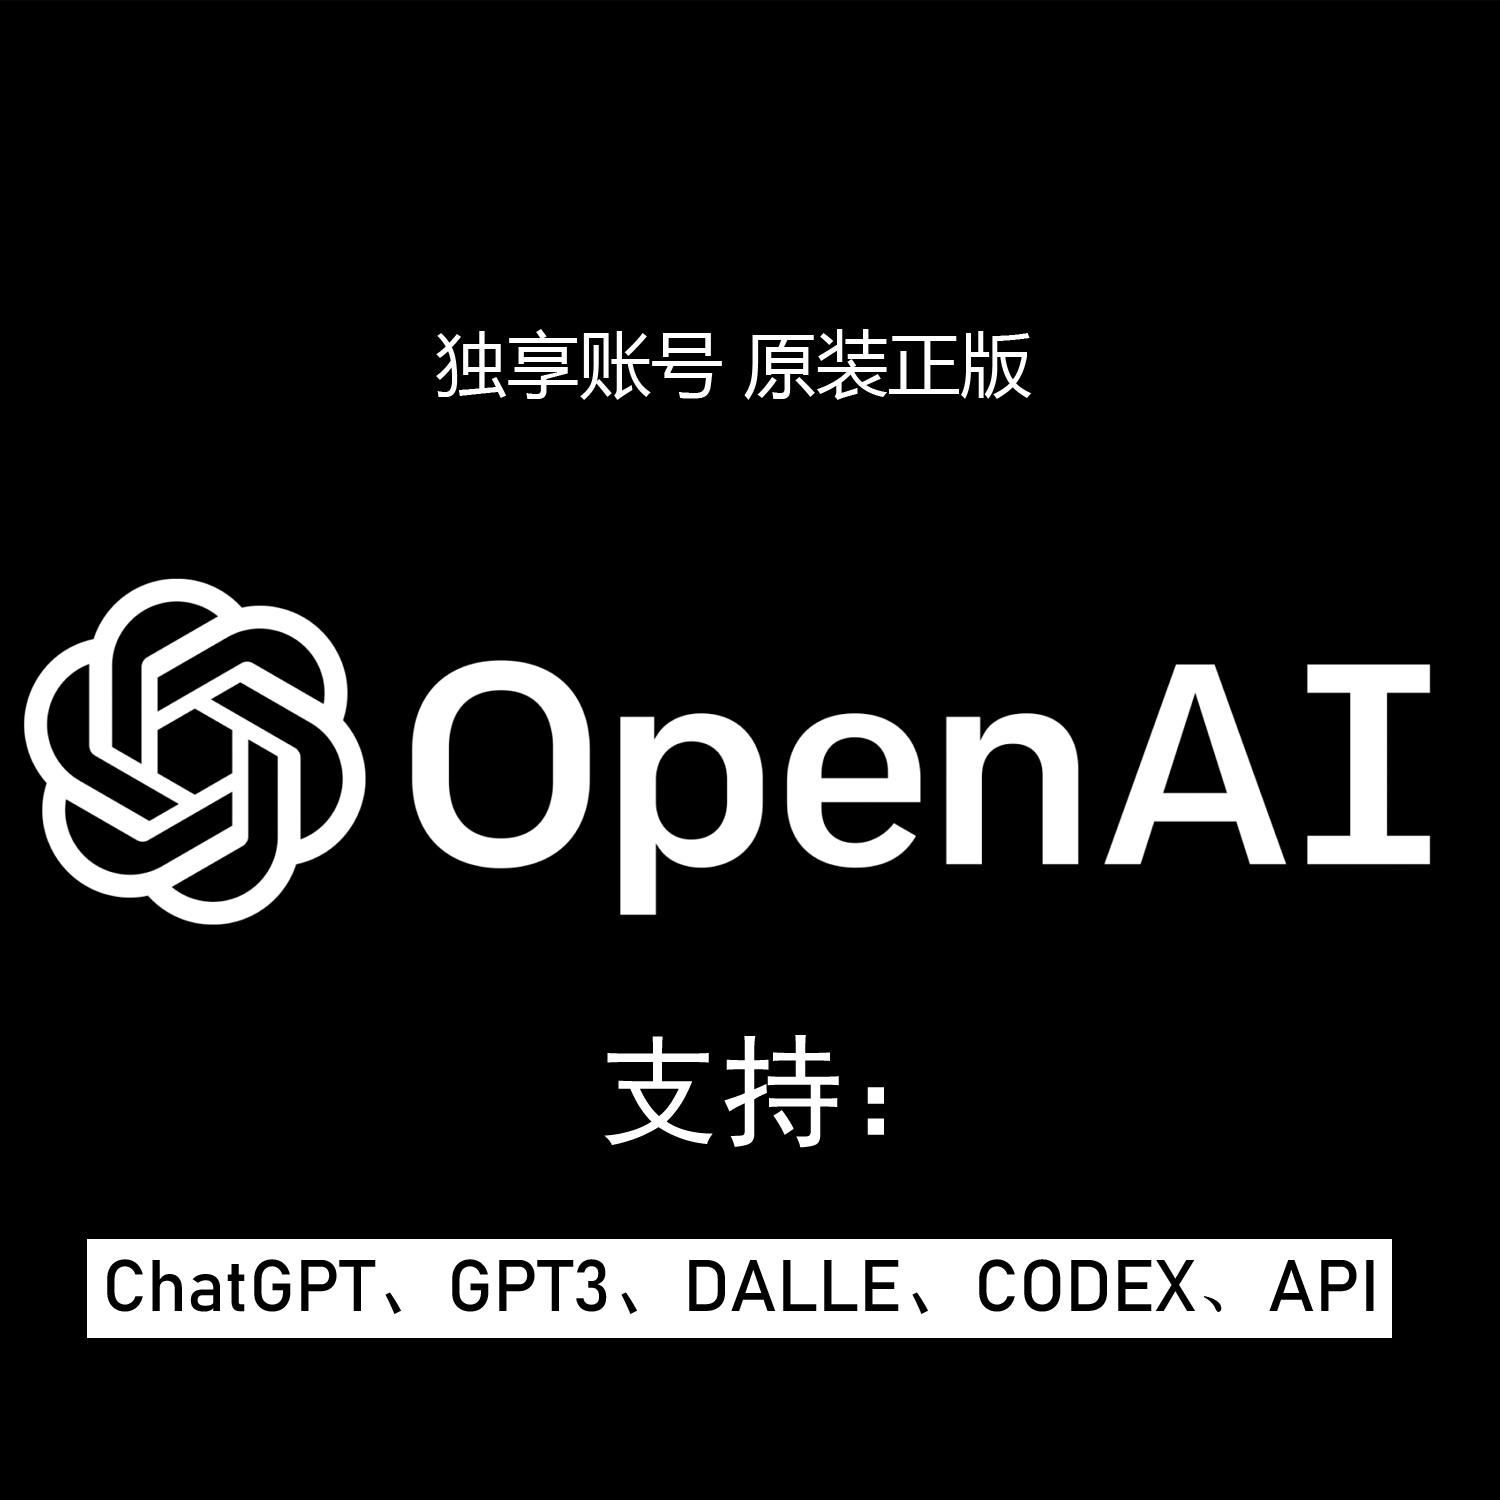 OpenAI/ChatGPT独享账号 | 手工注册 | 已过验证 | 支持改密 | 安全稳定